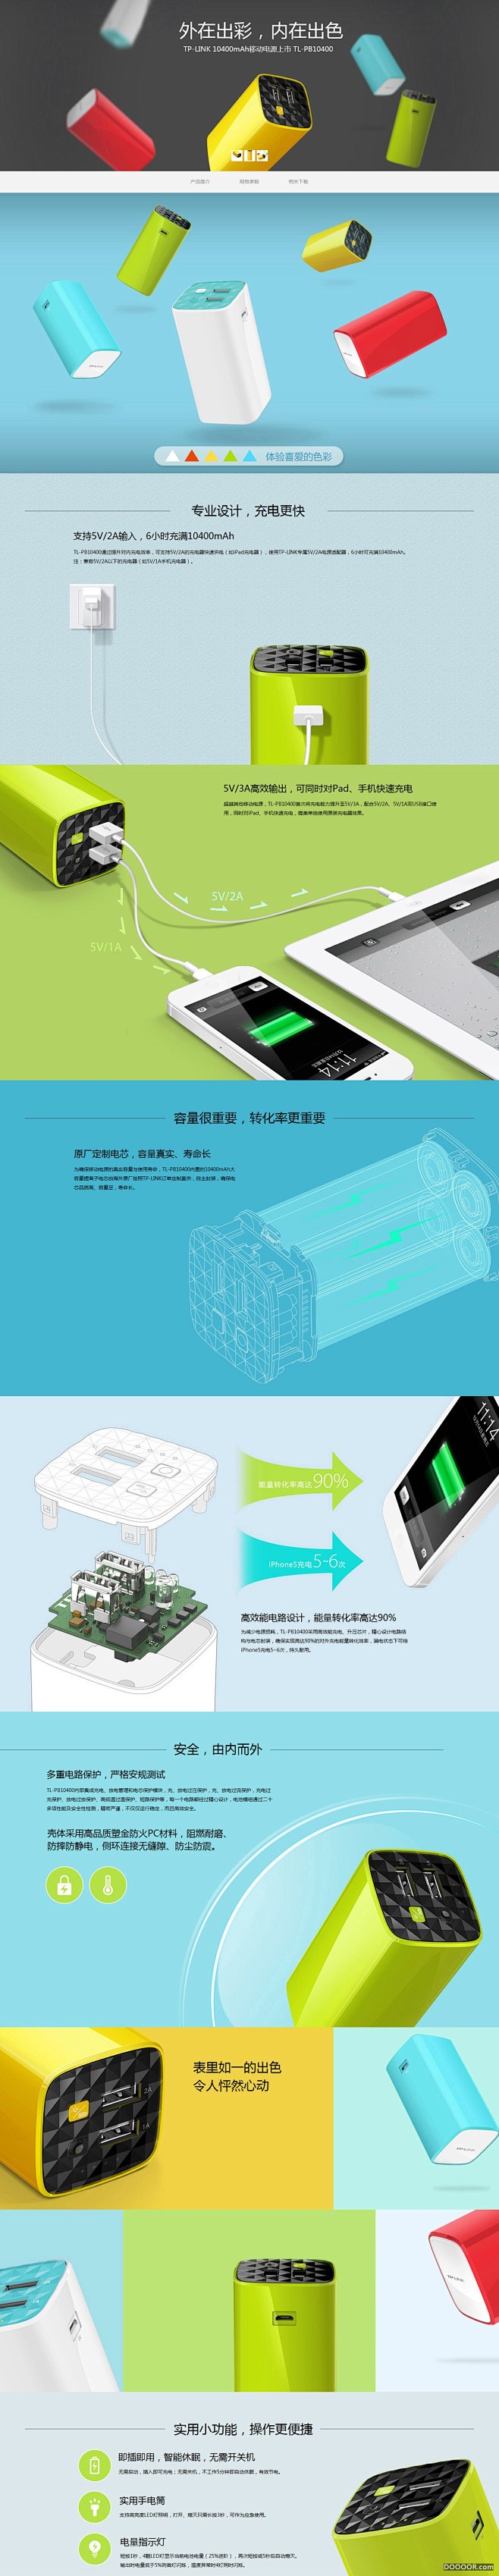 TP-LINK充电器详情页设计欣赏.jp...